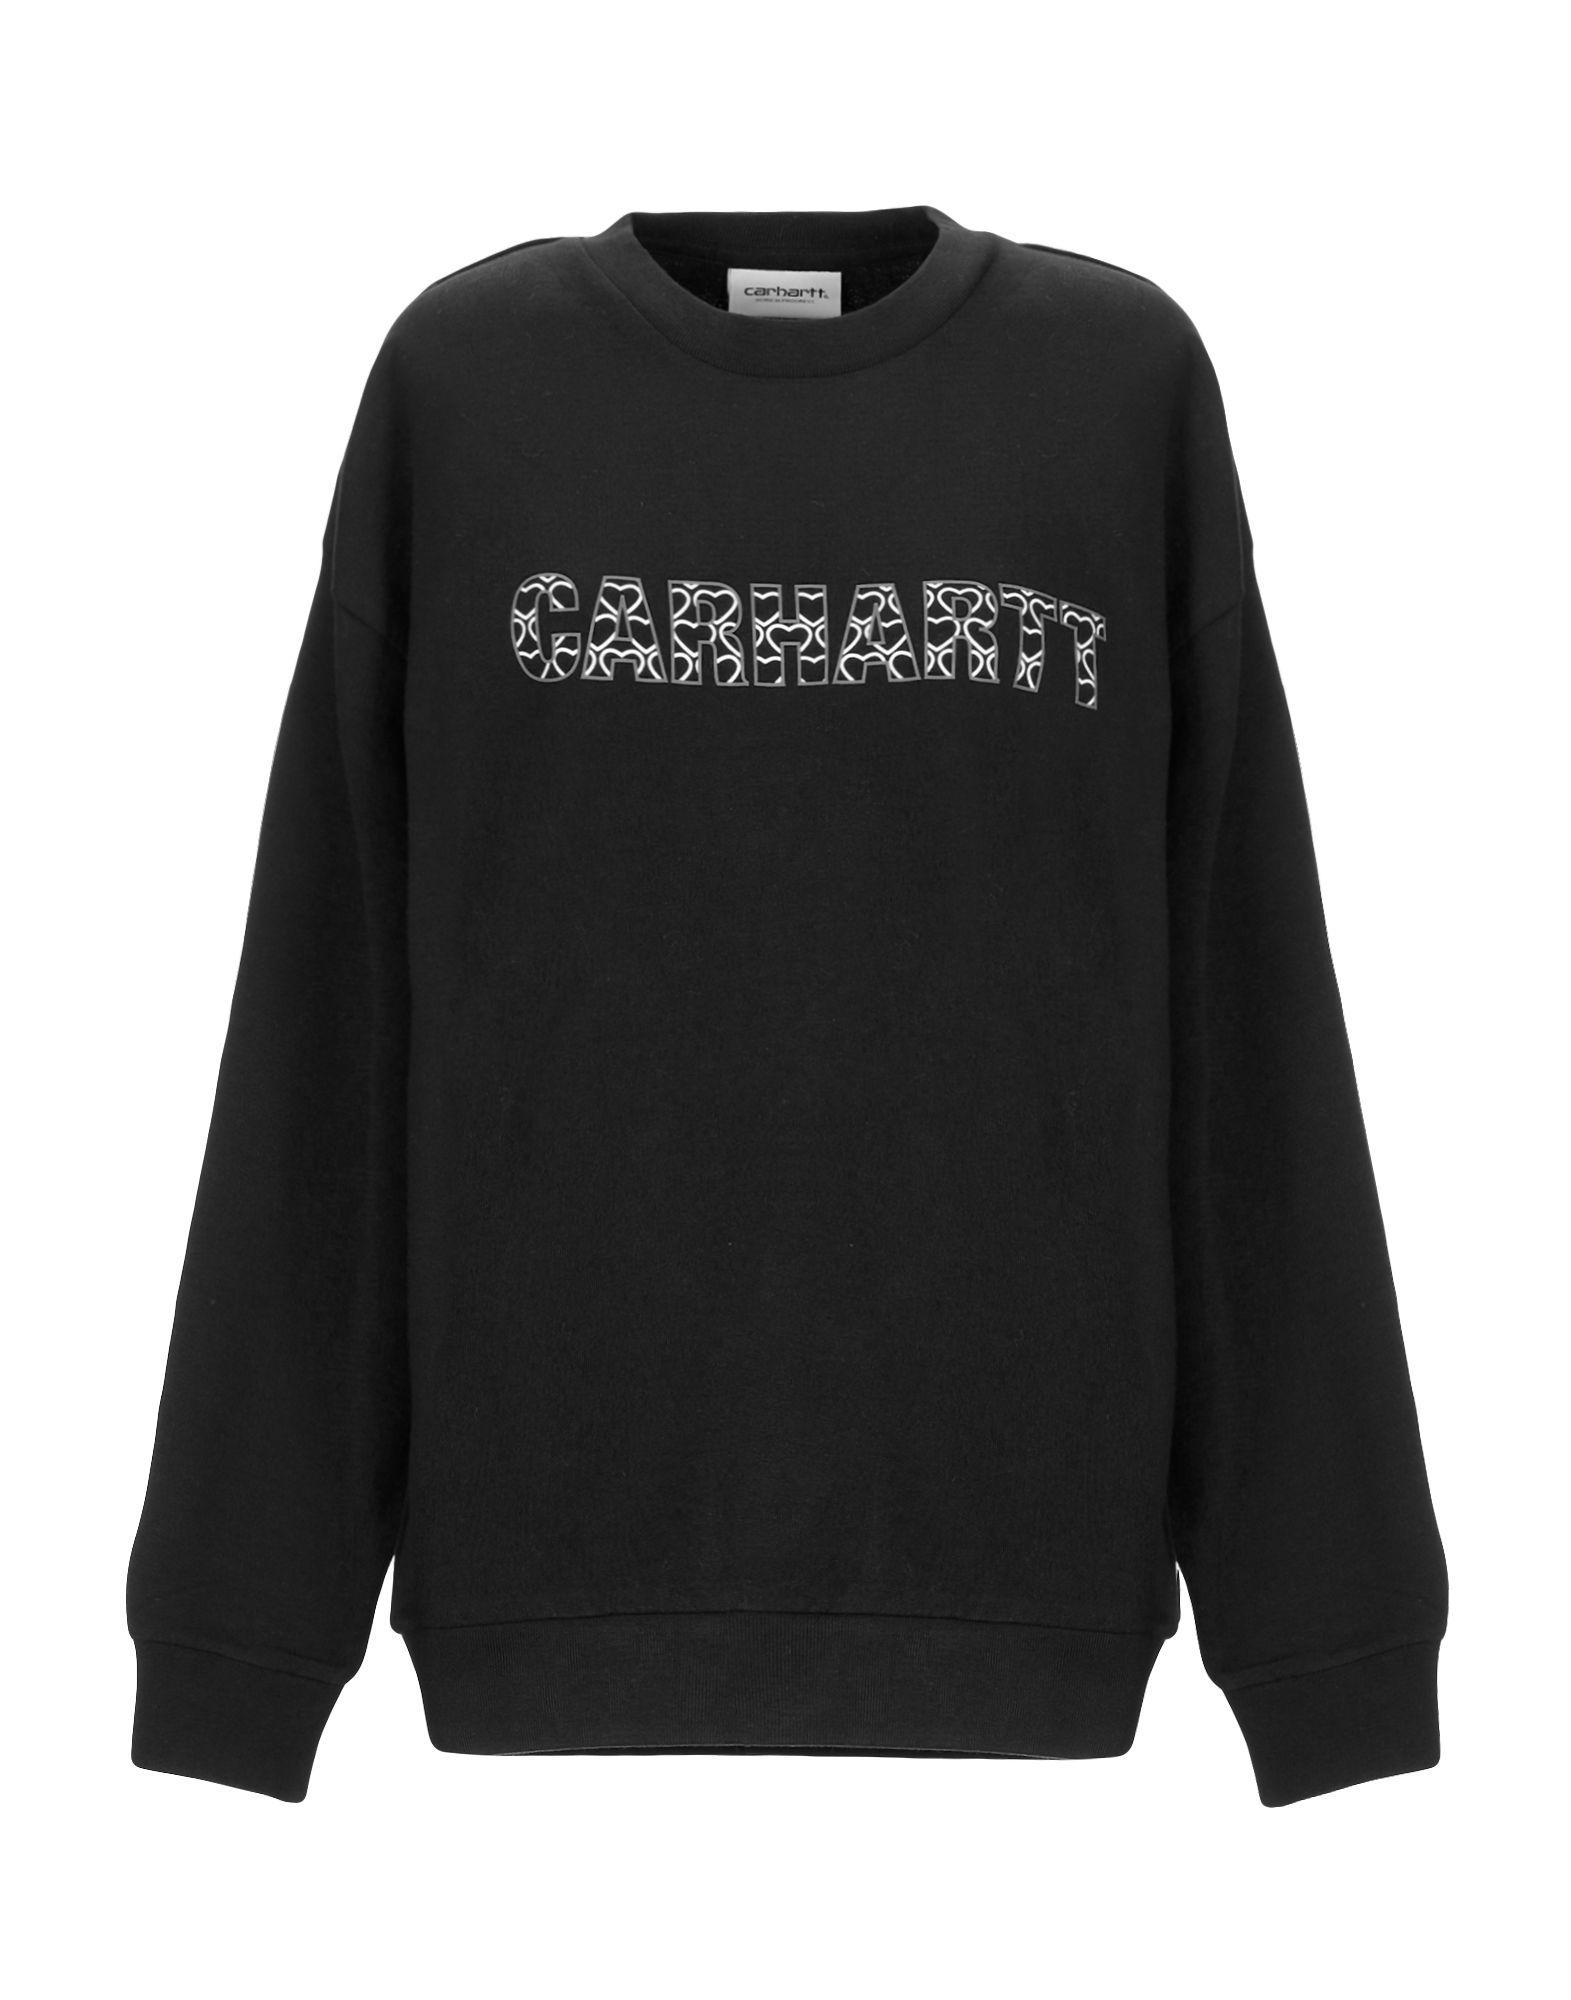 Carhartt Fleece Sweatshirt in Black - Lyst